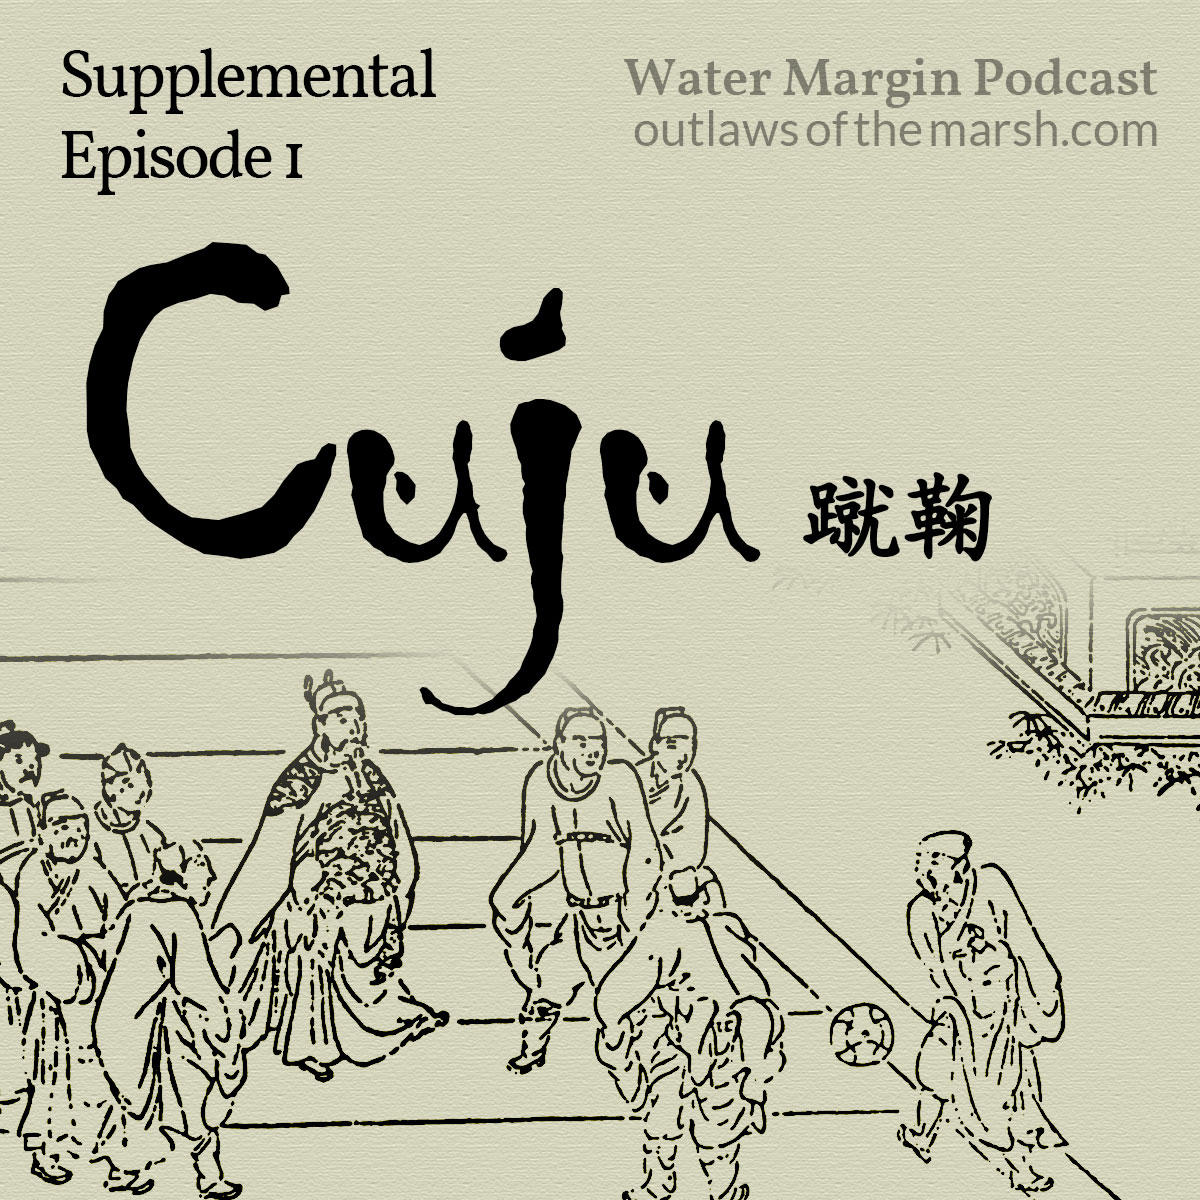 Water Margin Podcast: Supplemental Episode 1